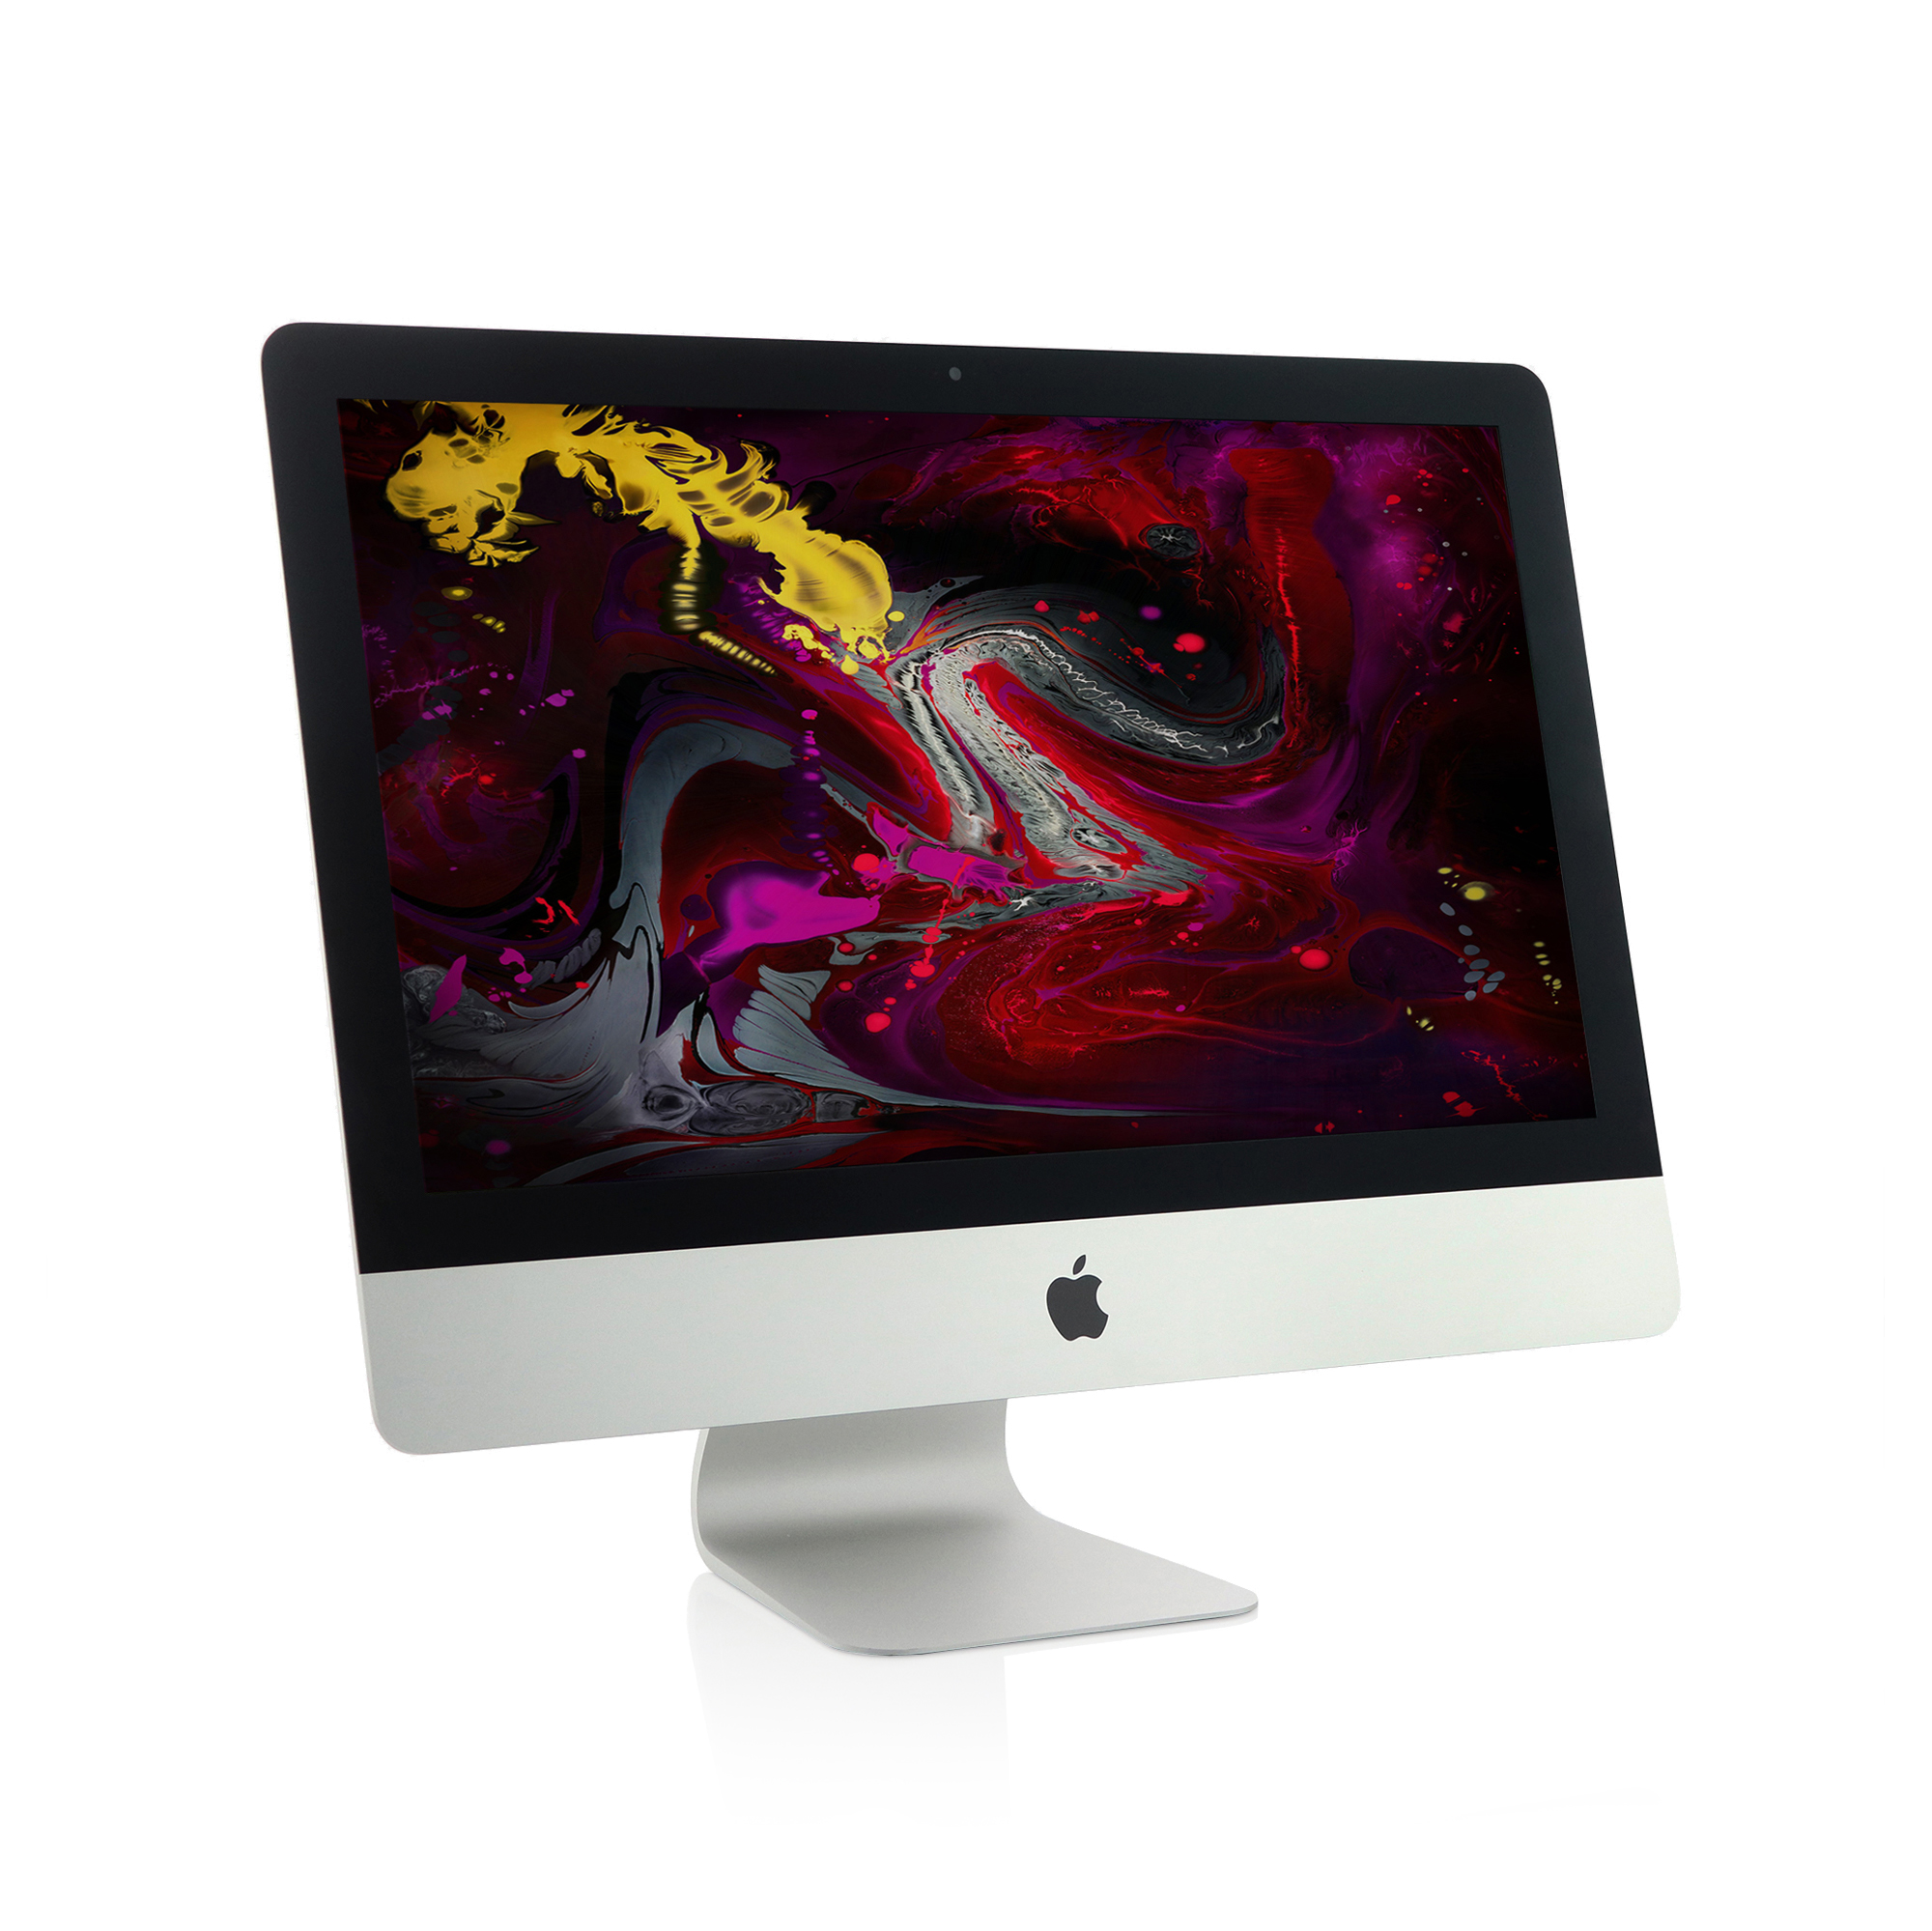 2017 Apple iMac 21.5-inch Intel i5 2.3 GHz 2-core 8GB RAM 256GB SSD - 